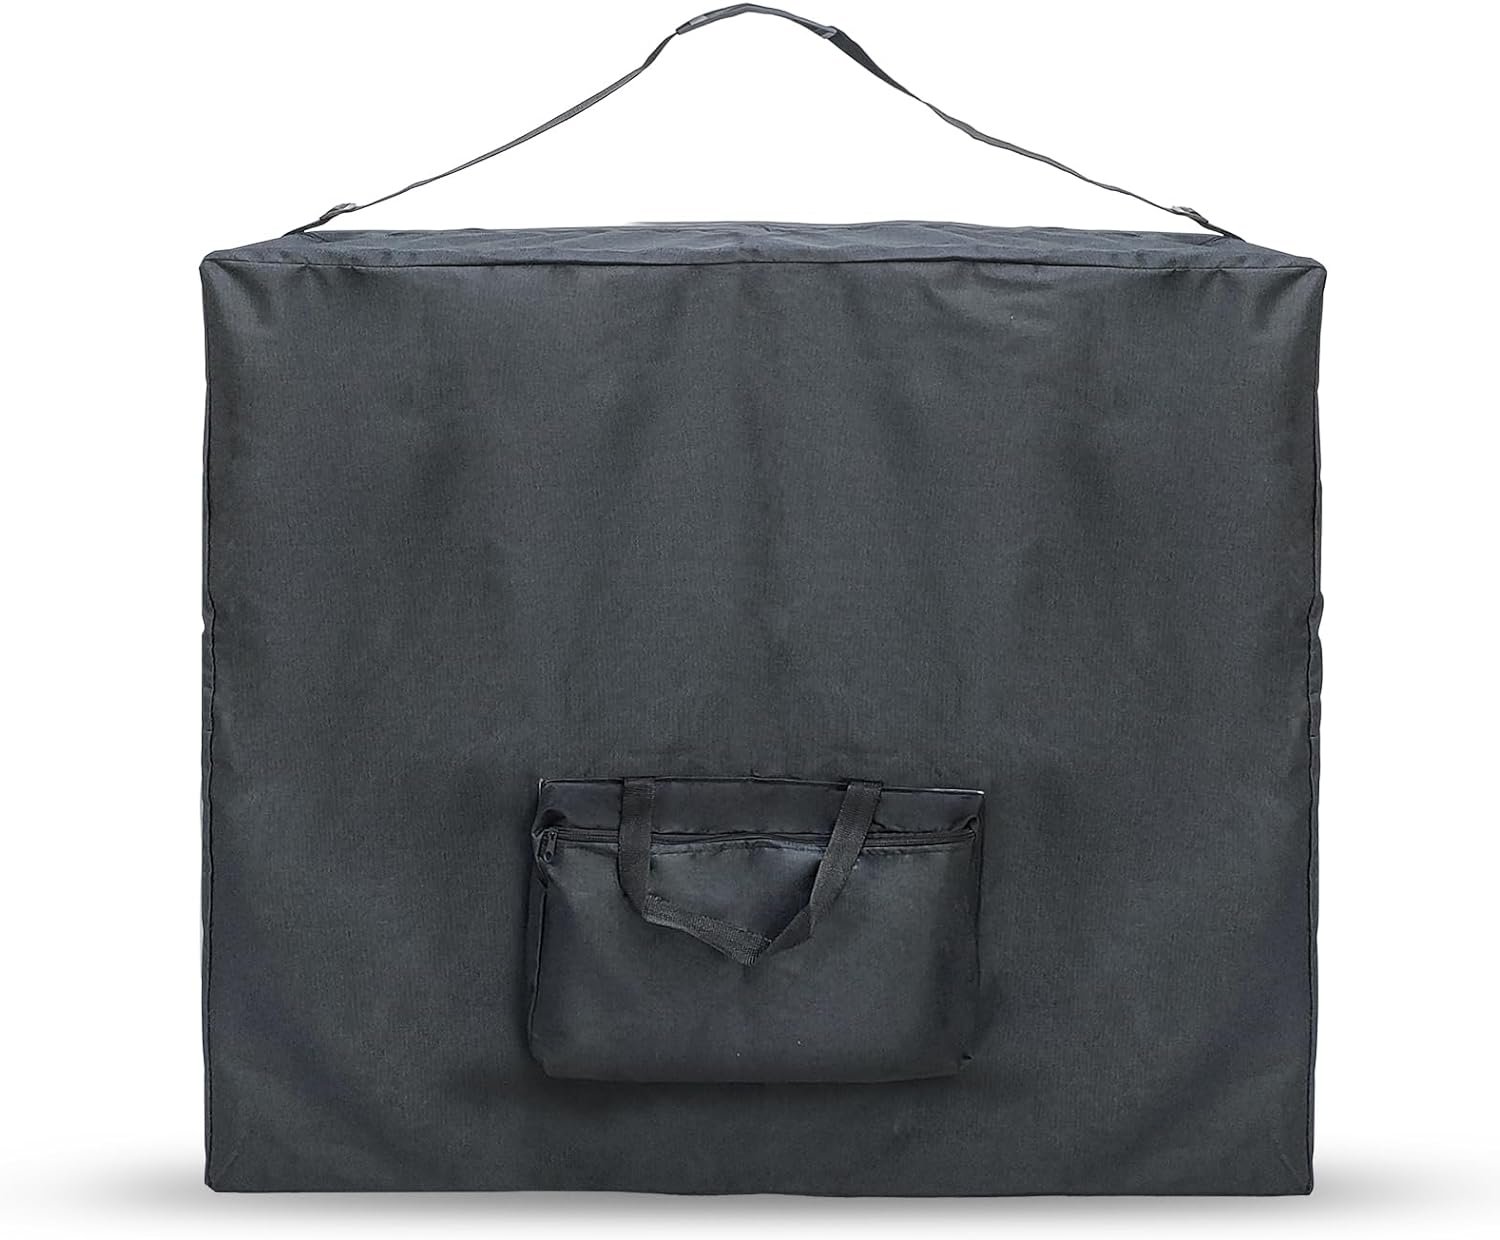 Elitzia Carry Bag for Portable Massage Tables Review